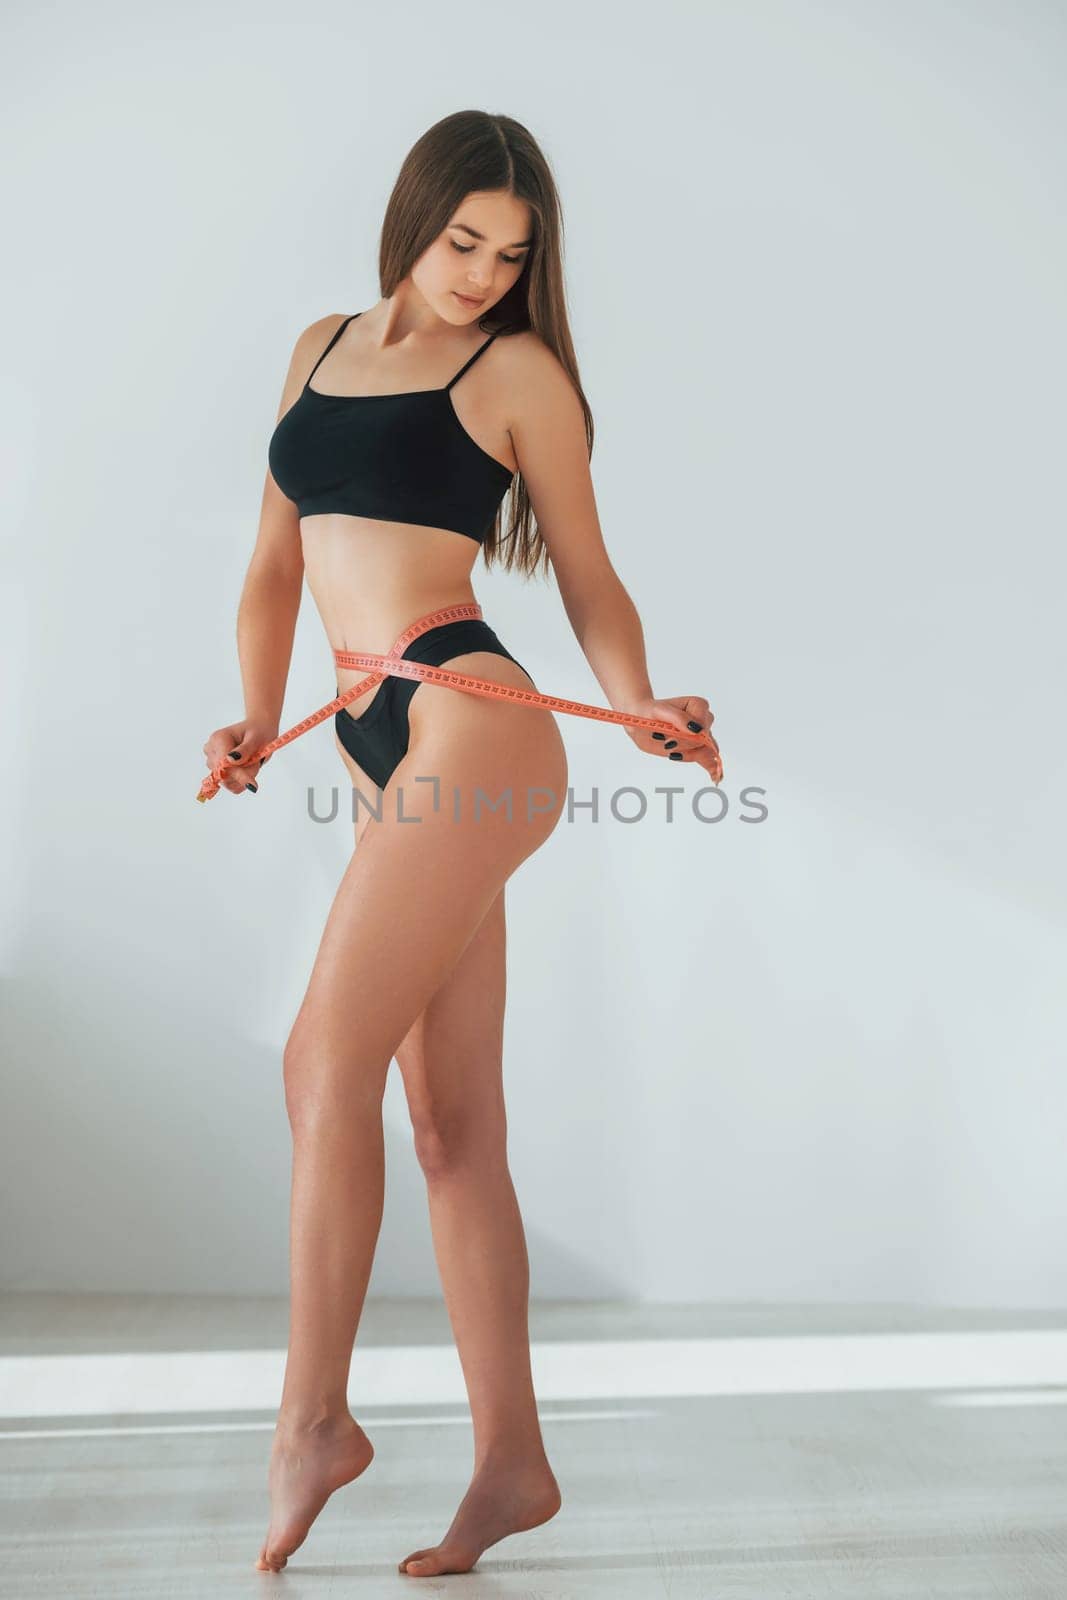 Measuring the waist. Beautiful woman in underwear is posing indoors.